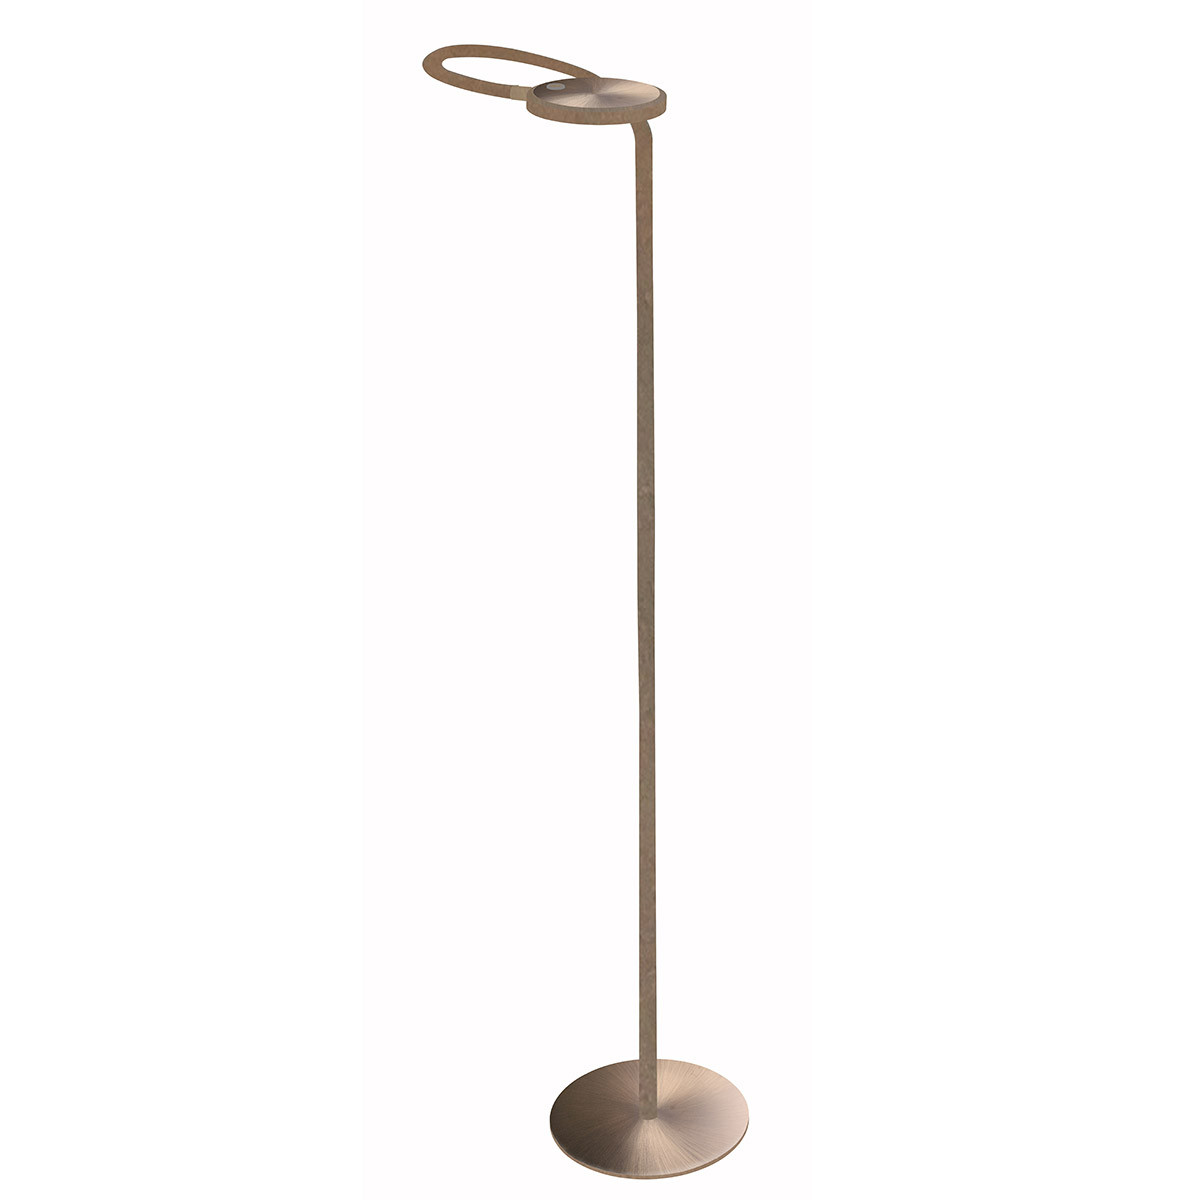 lampara-de-pie-bronce-led-orientable-mexlite-platu-3351br